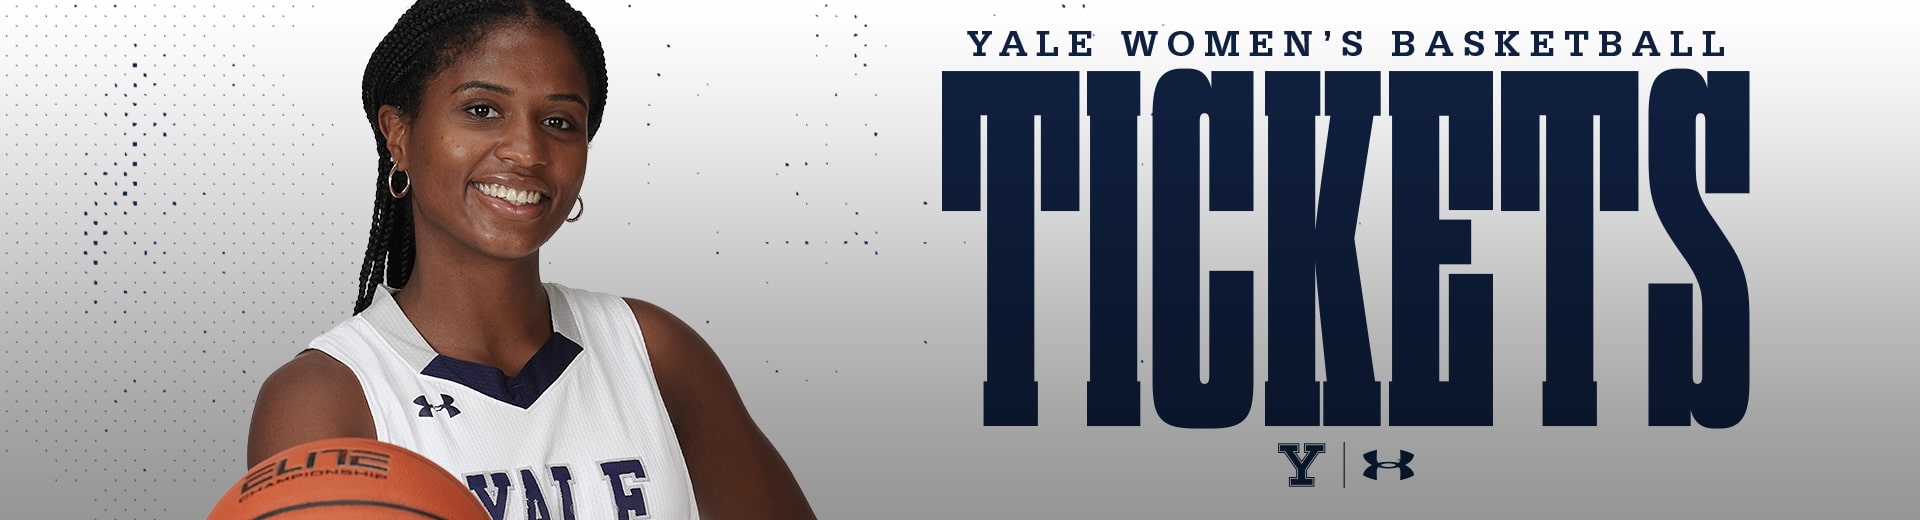 Yale Women's Basketball